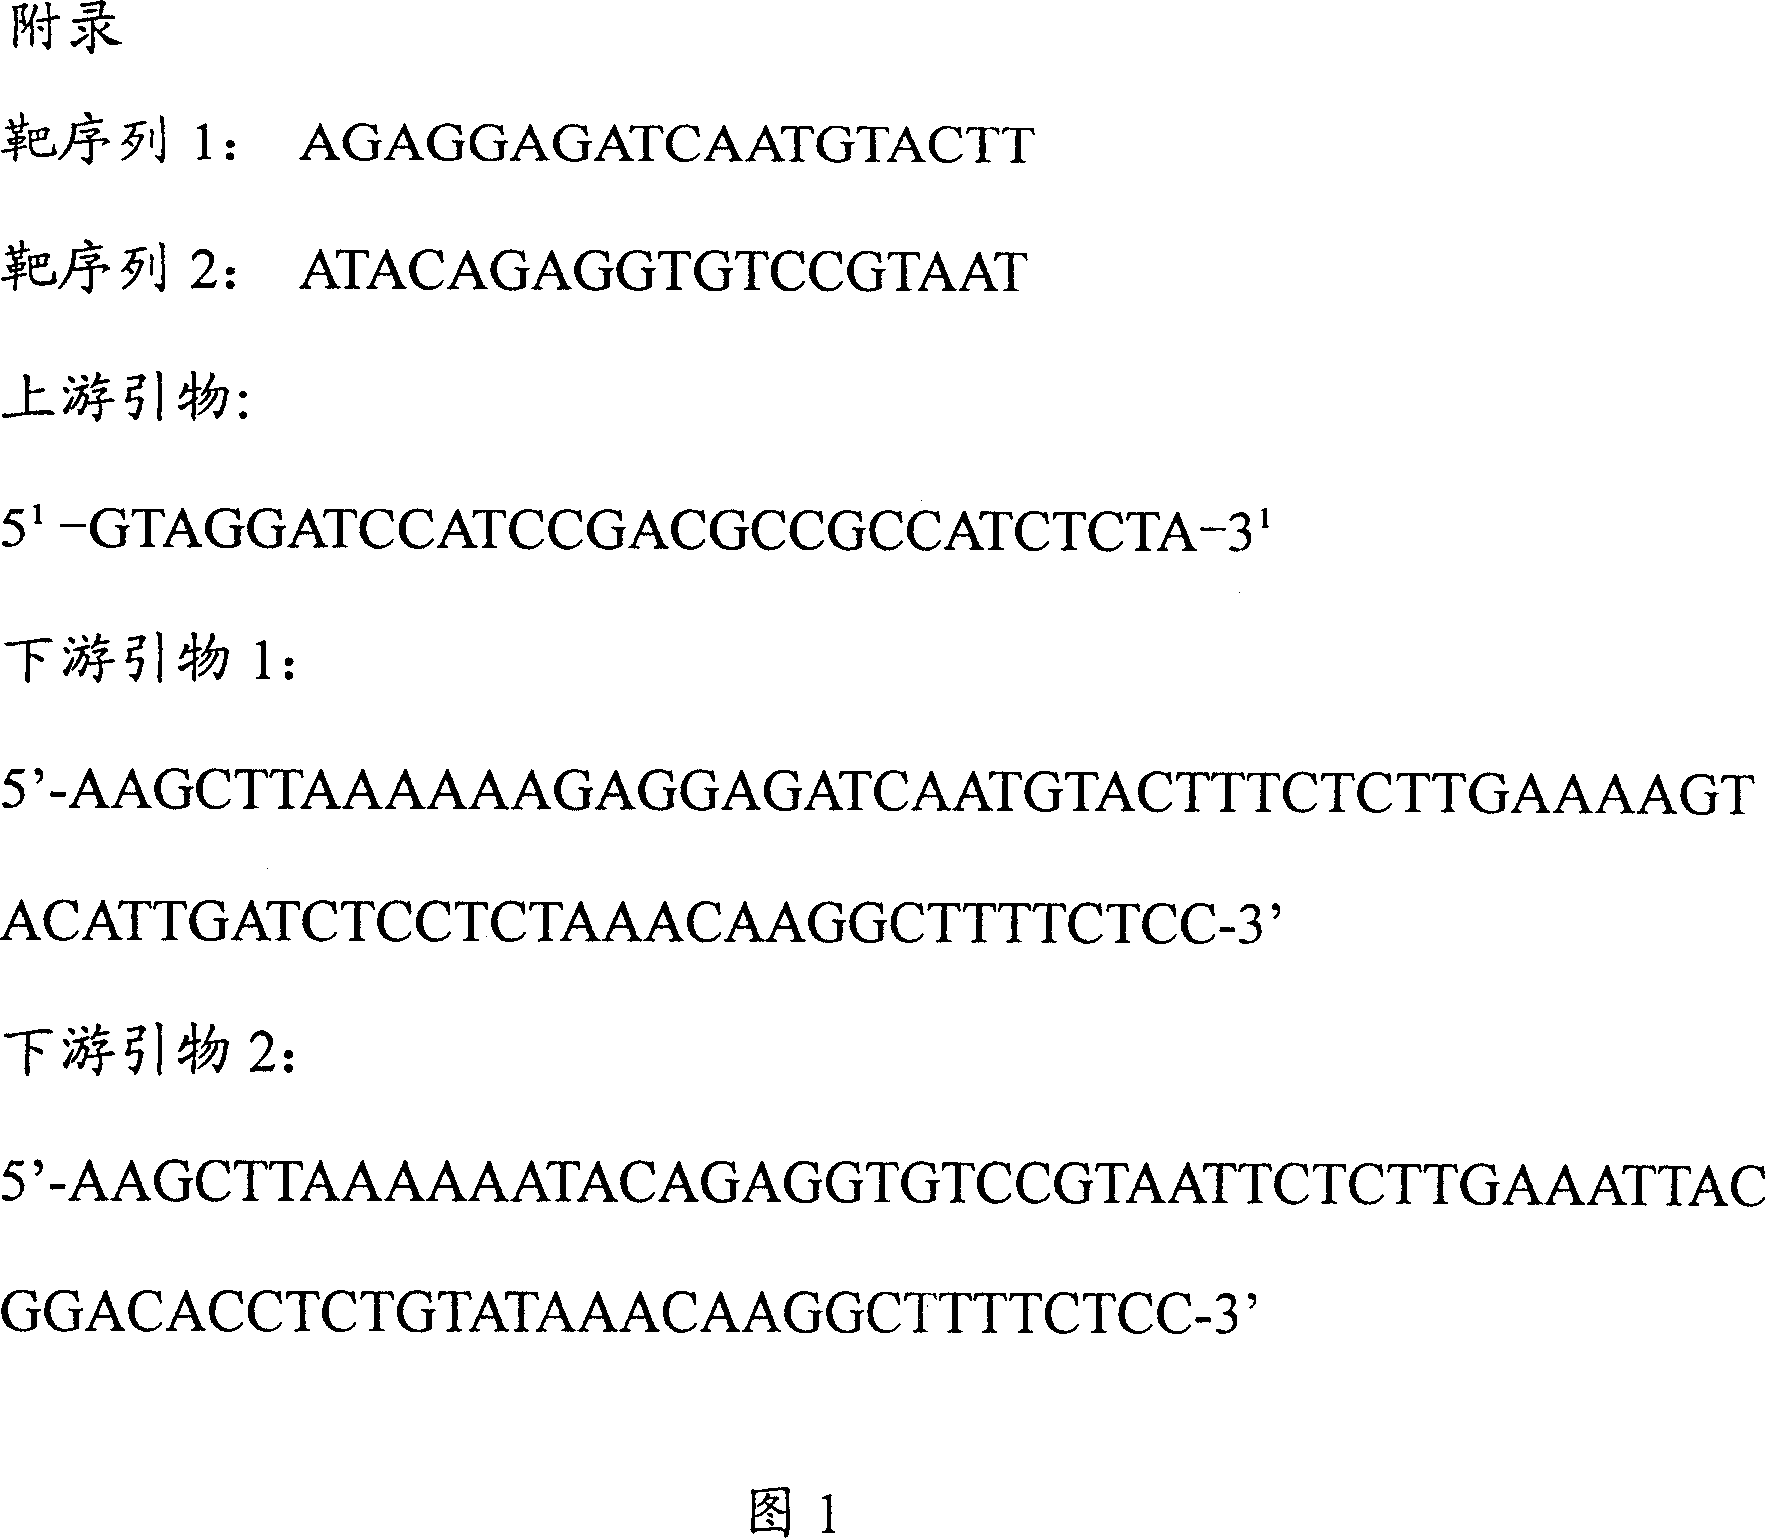 Method for constructing interference plasmid of human fibrinogen hf12 shRNA, and pharmic usage